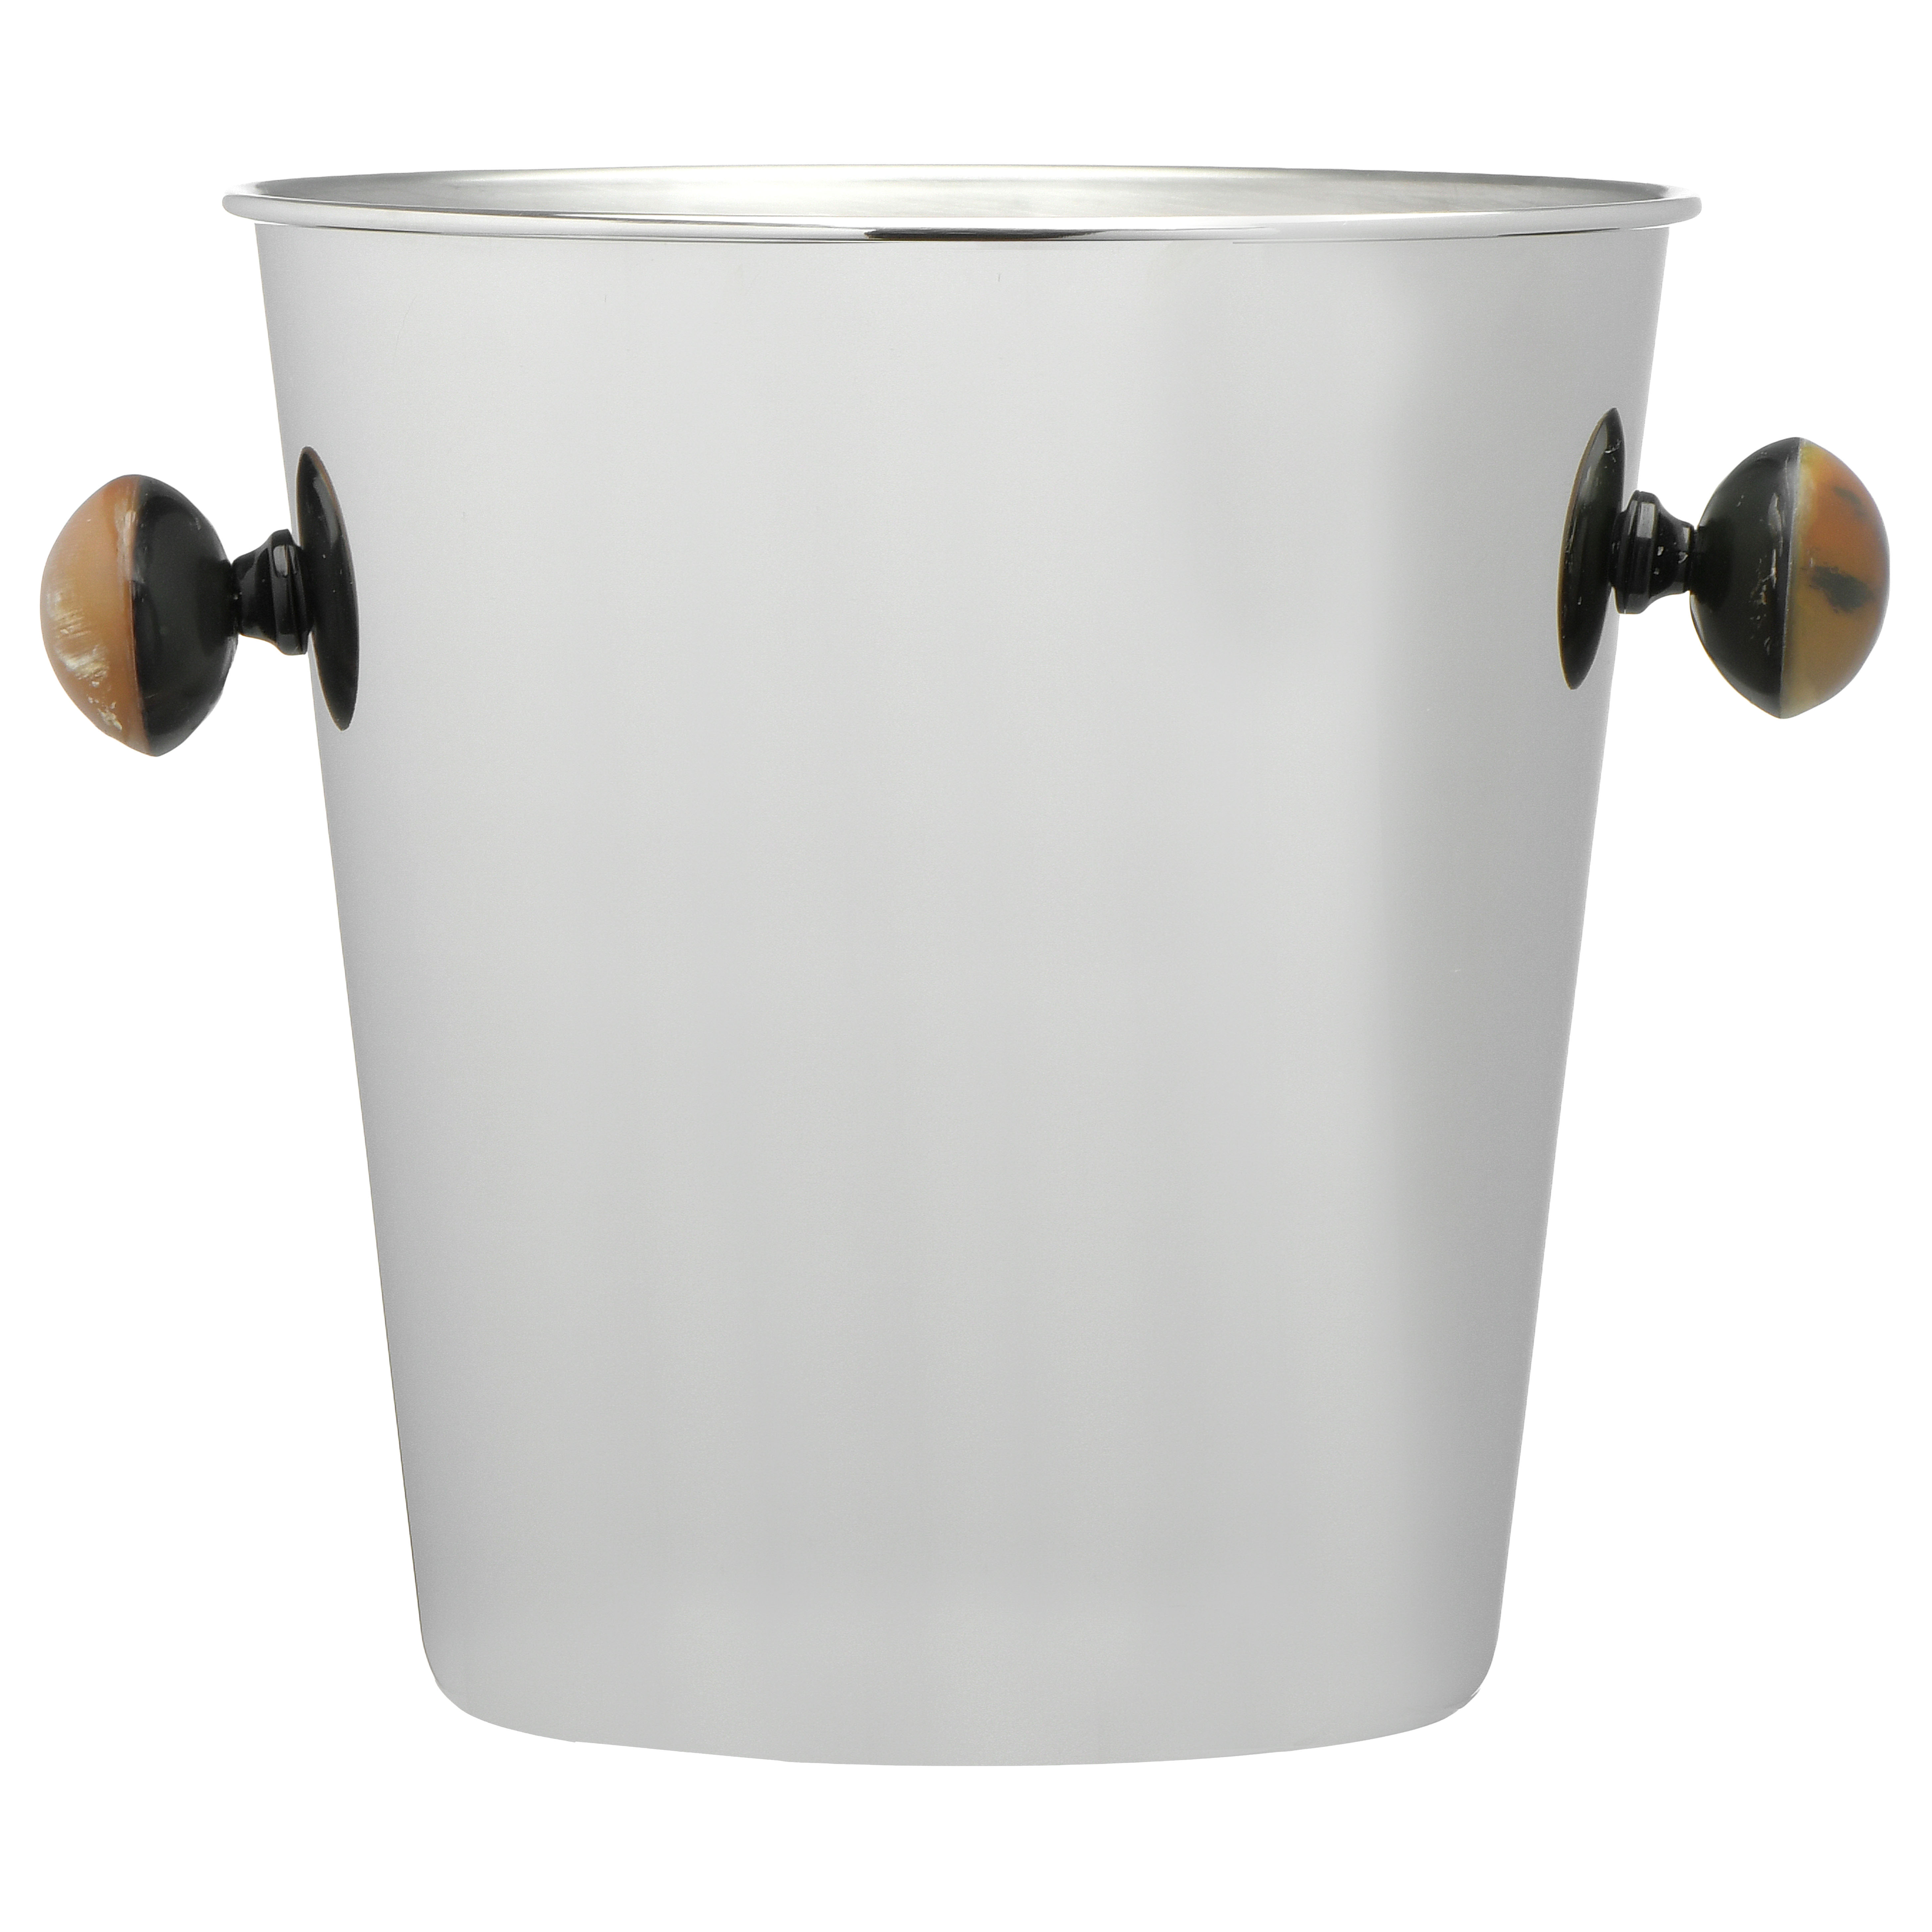 Quart Stainless Steel Ice Bucket with Horn Handles - Moss & Wilder